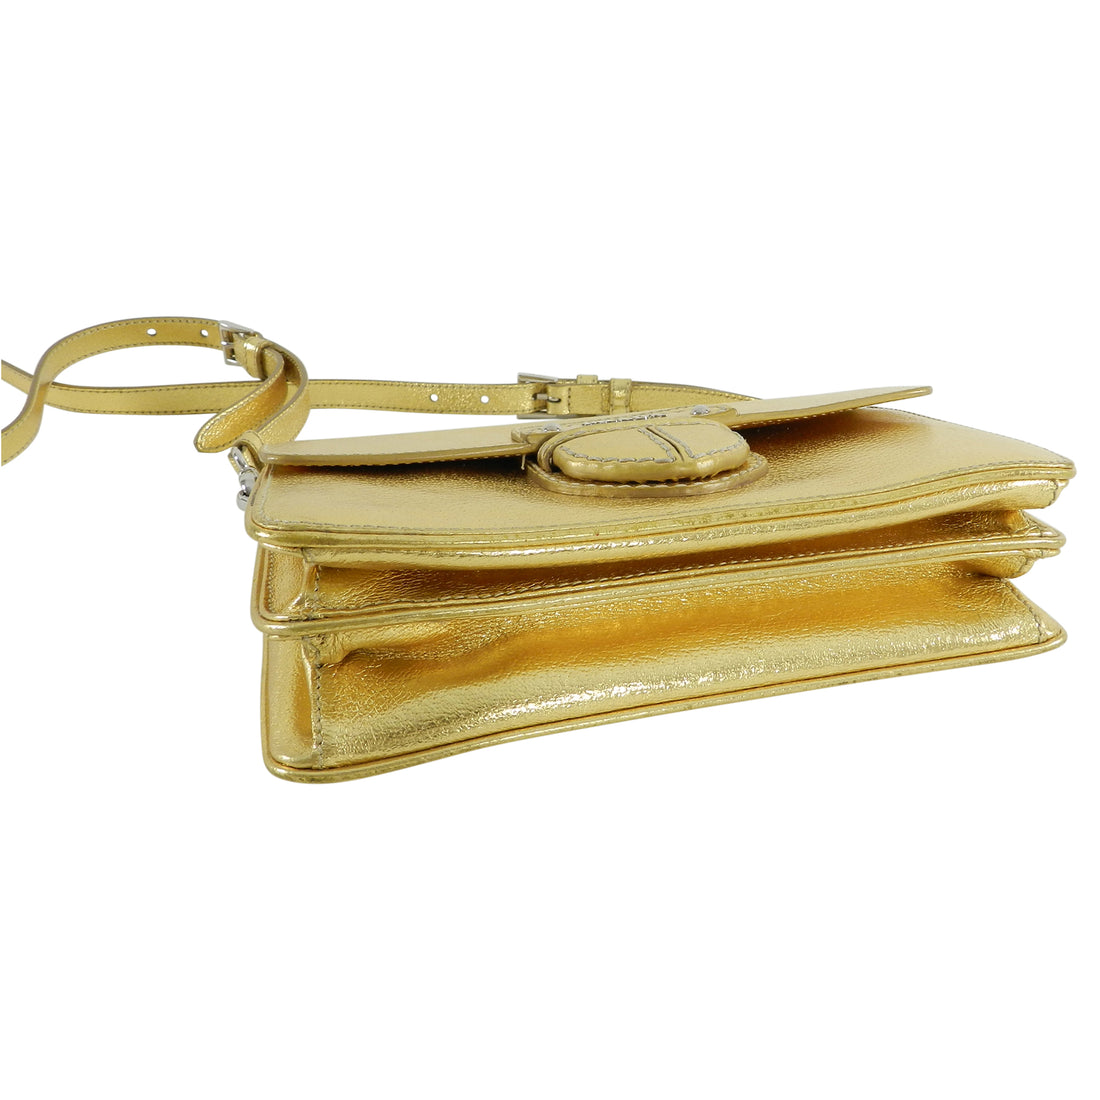 Prada Gold Metallic Small Crossbody Bag